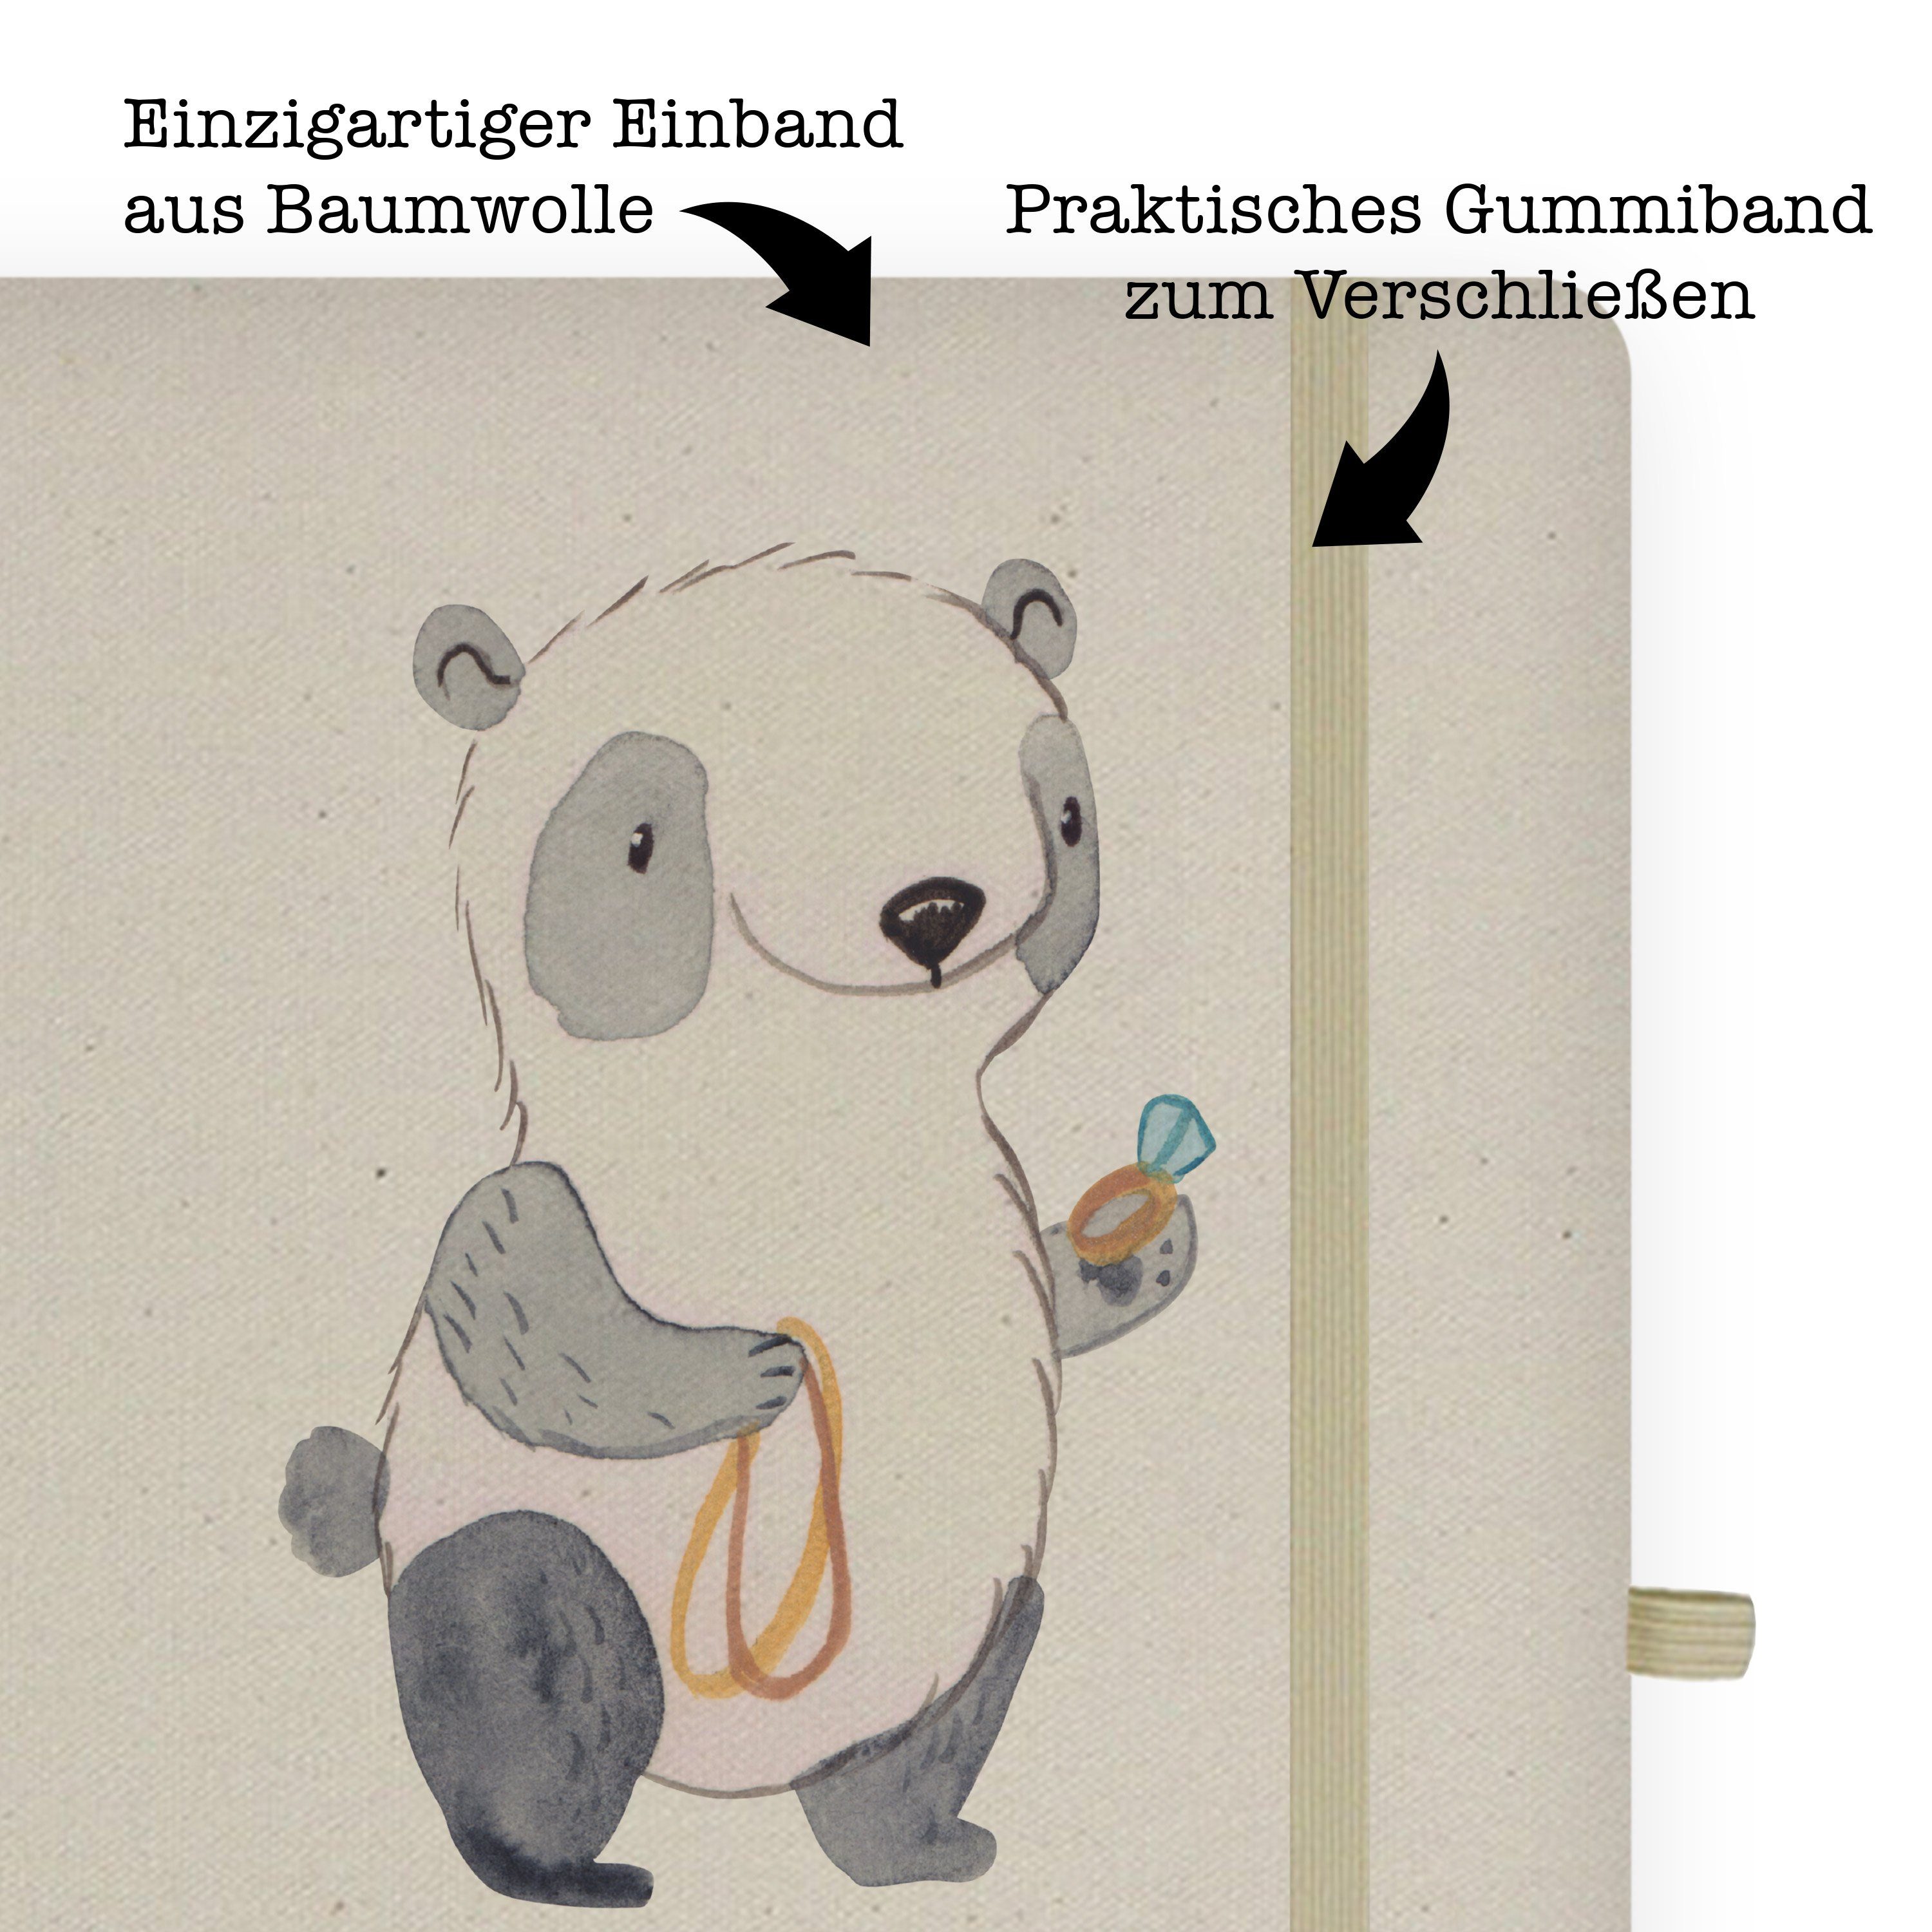 - Herz Mrs. mit Notizen, & Goldschmied Geschenk, Panda A Transparent Mrs. - & Notizbuch Mr. Mr. Adressbuch, Panda